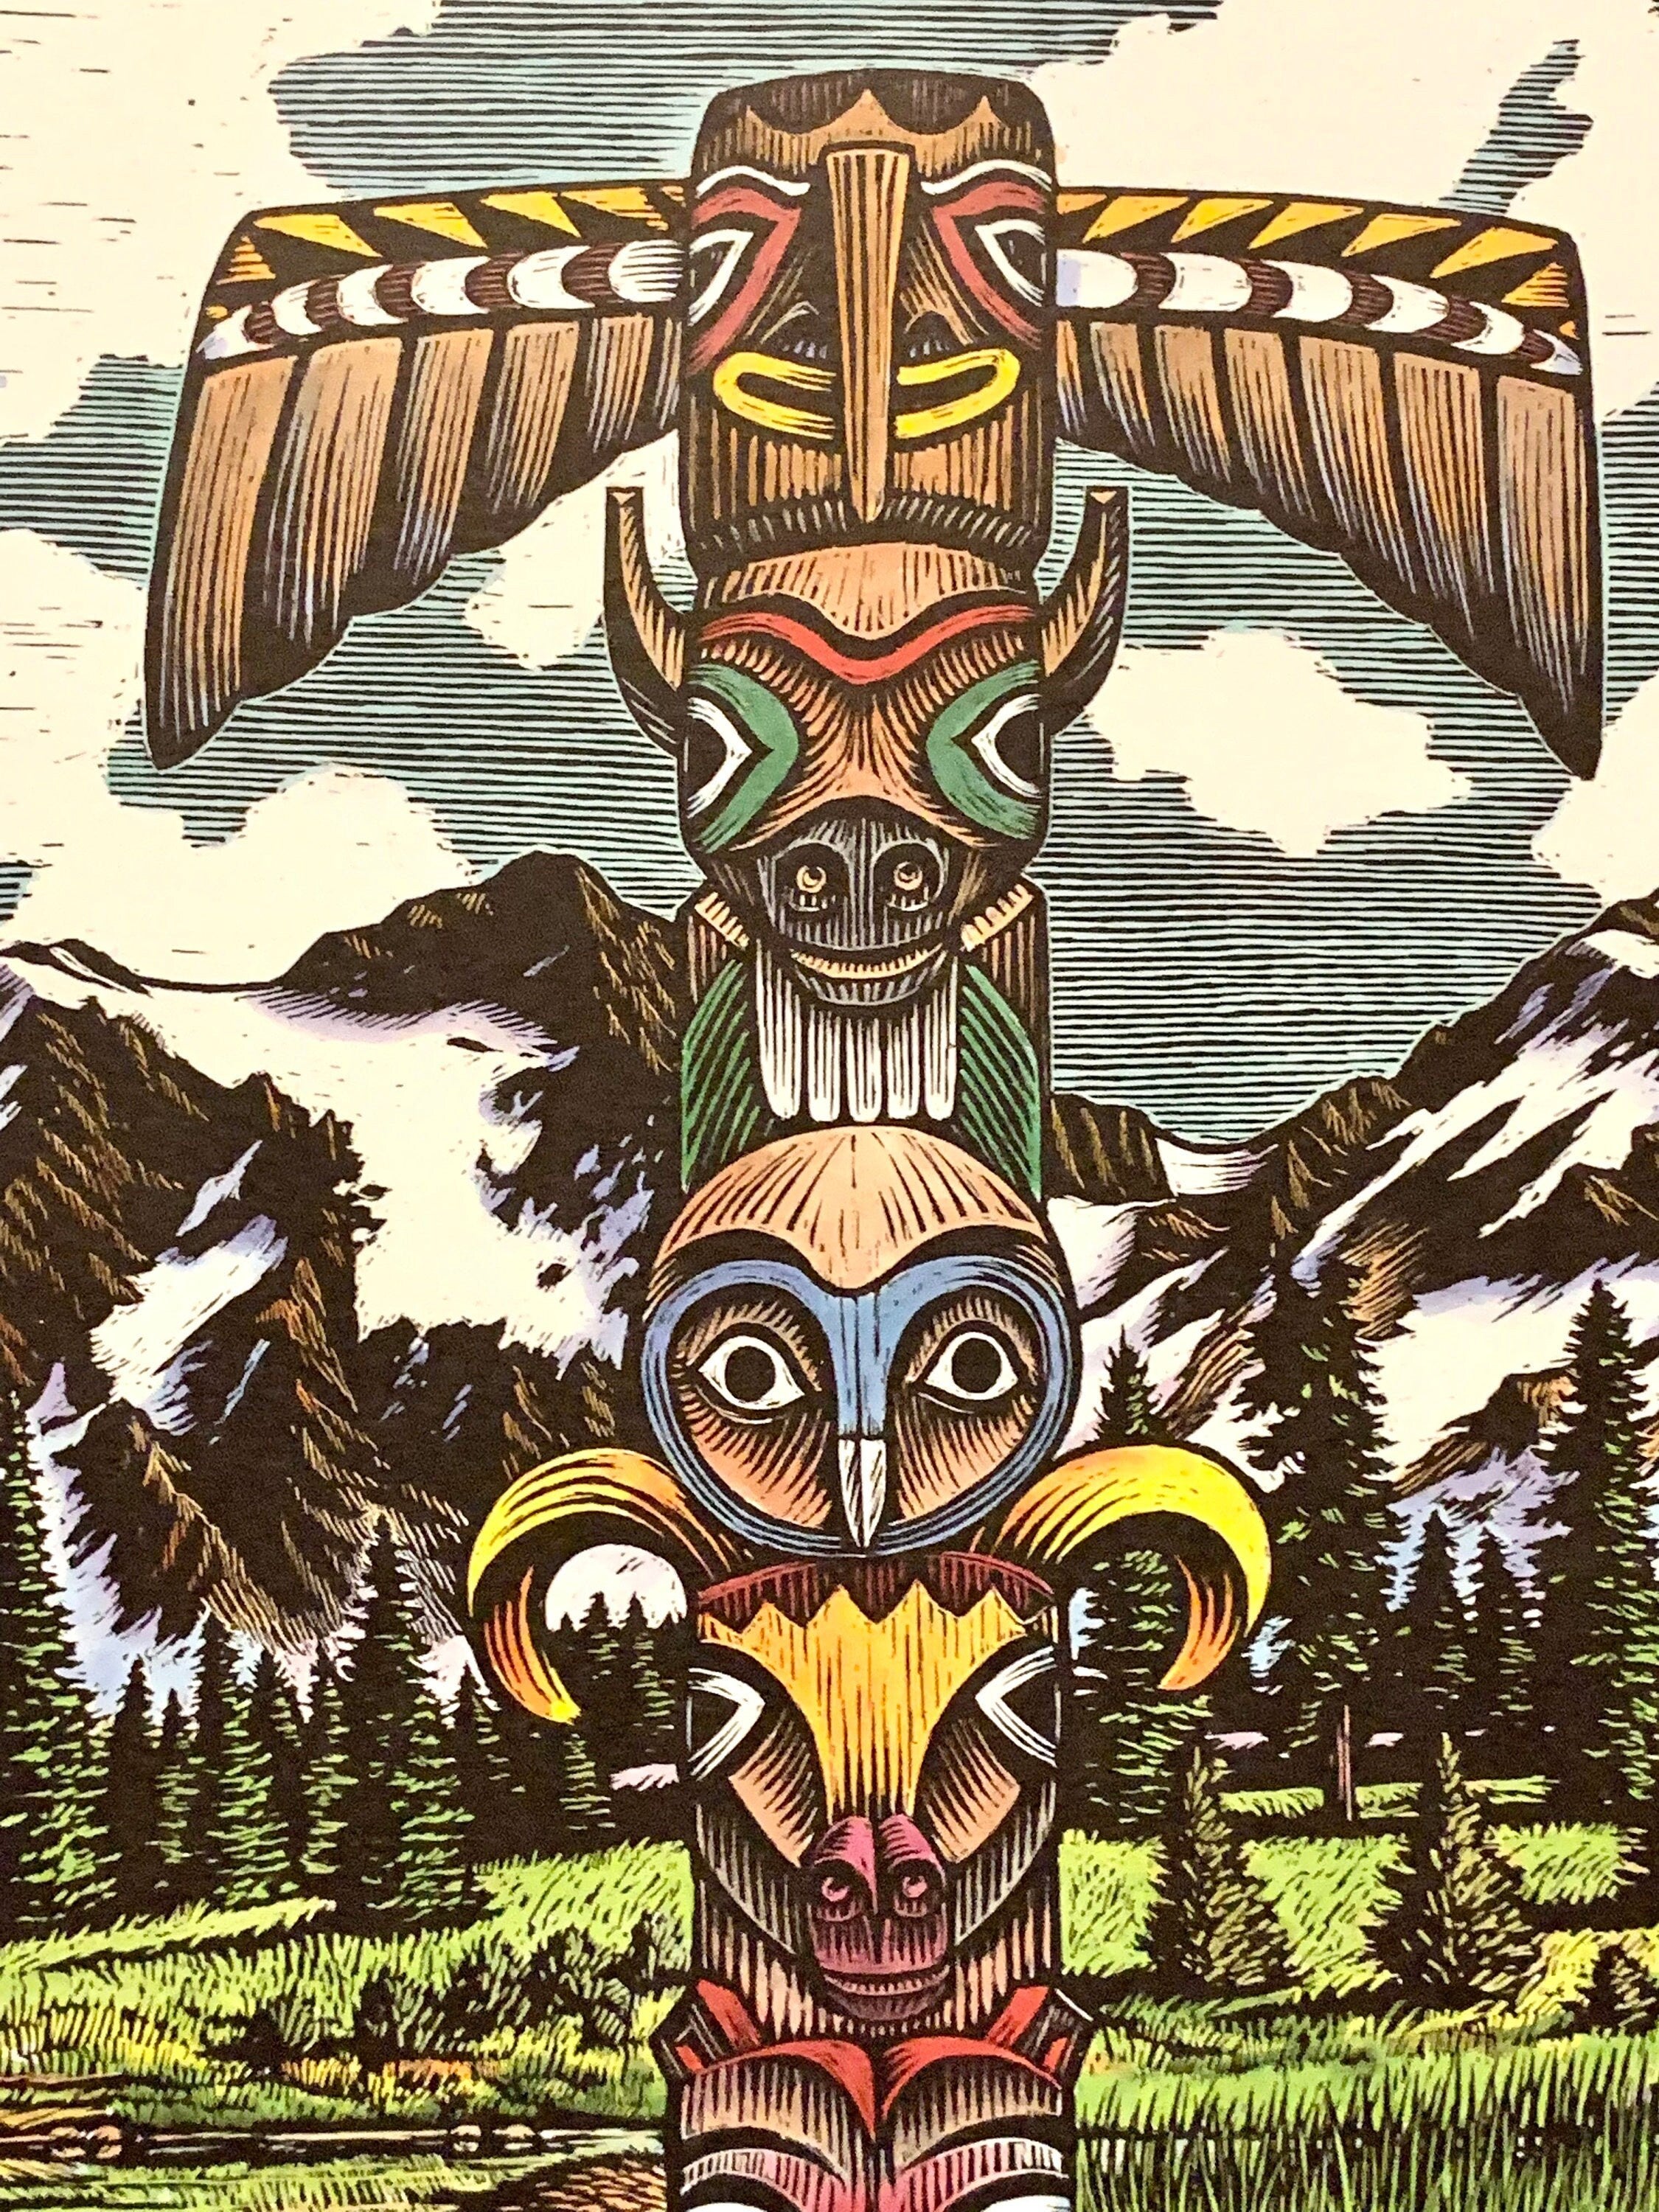 Vintage Poster "Zoofest 94; 1994 "Celebrating the Great Northwest"